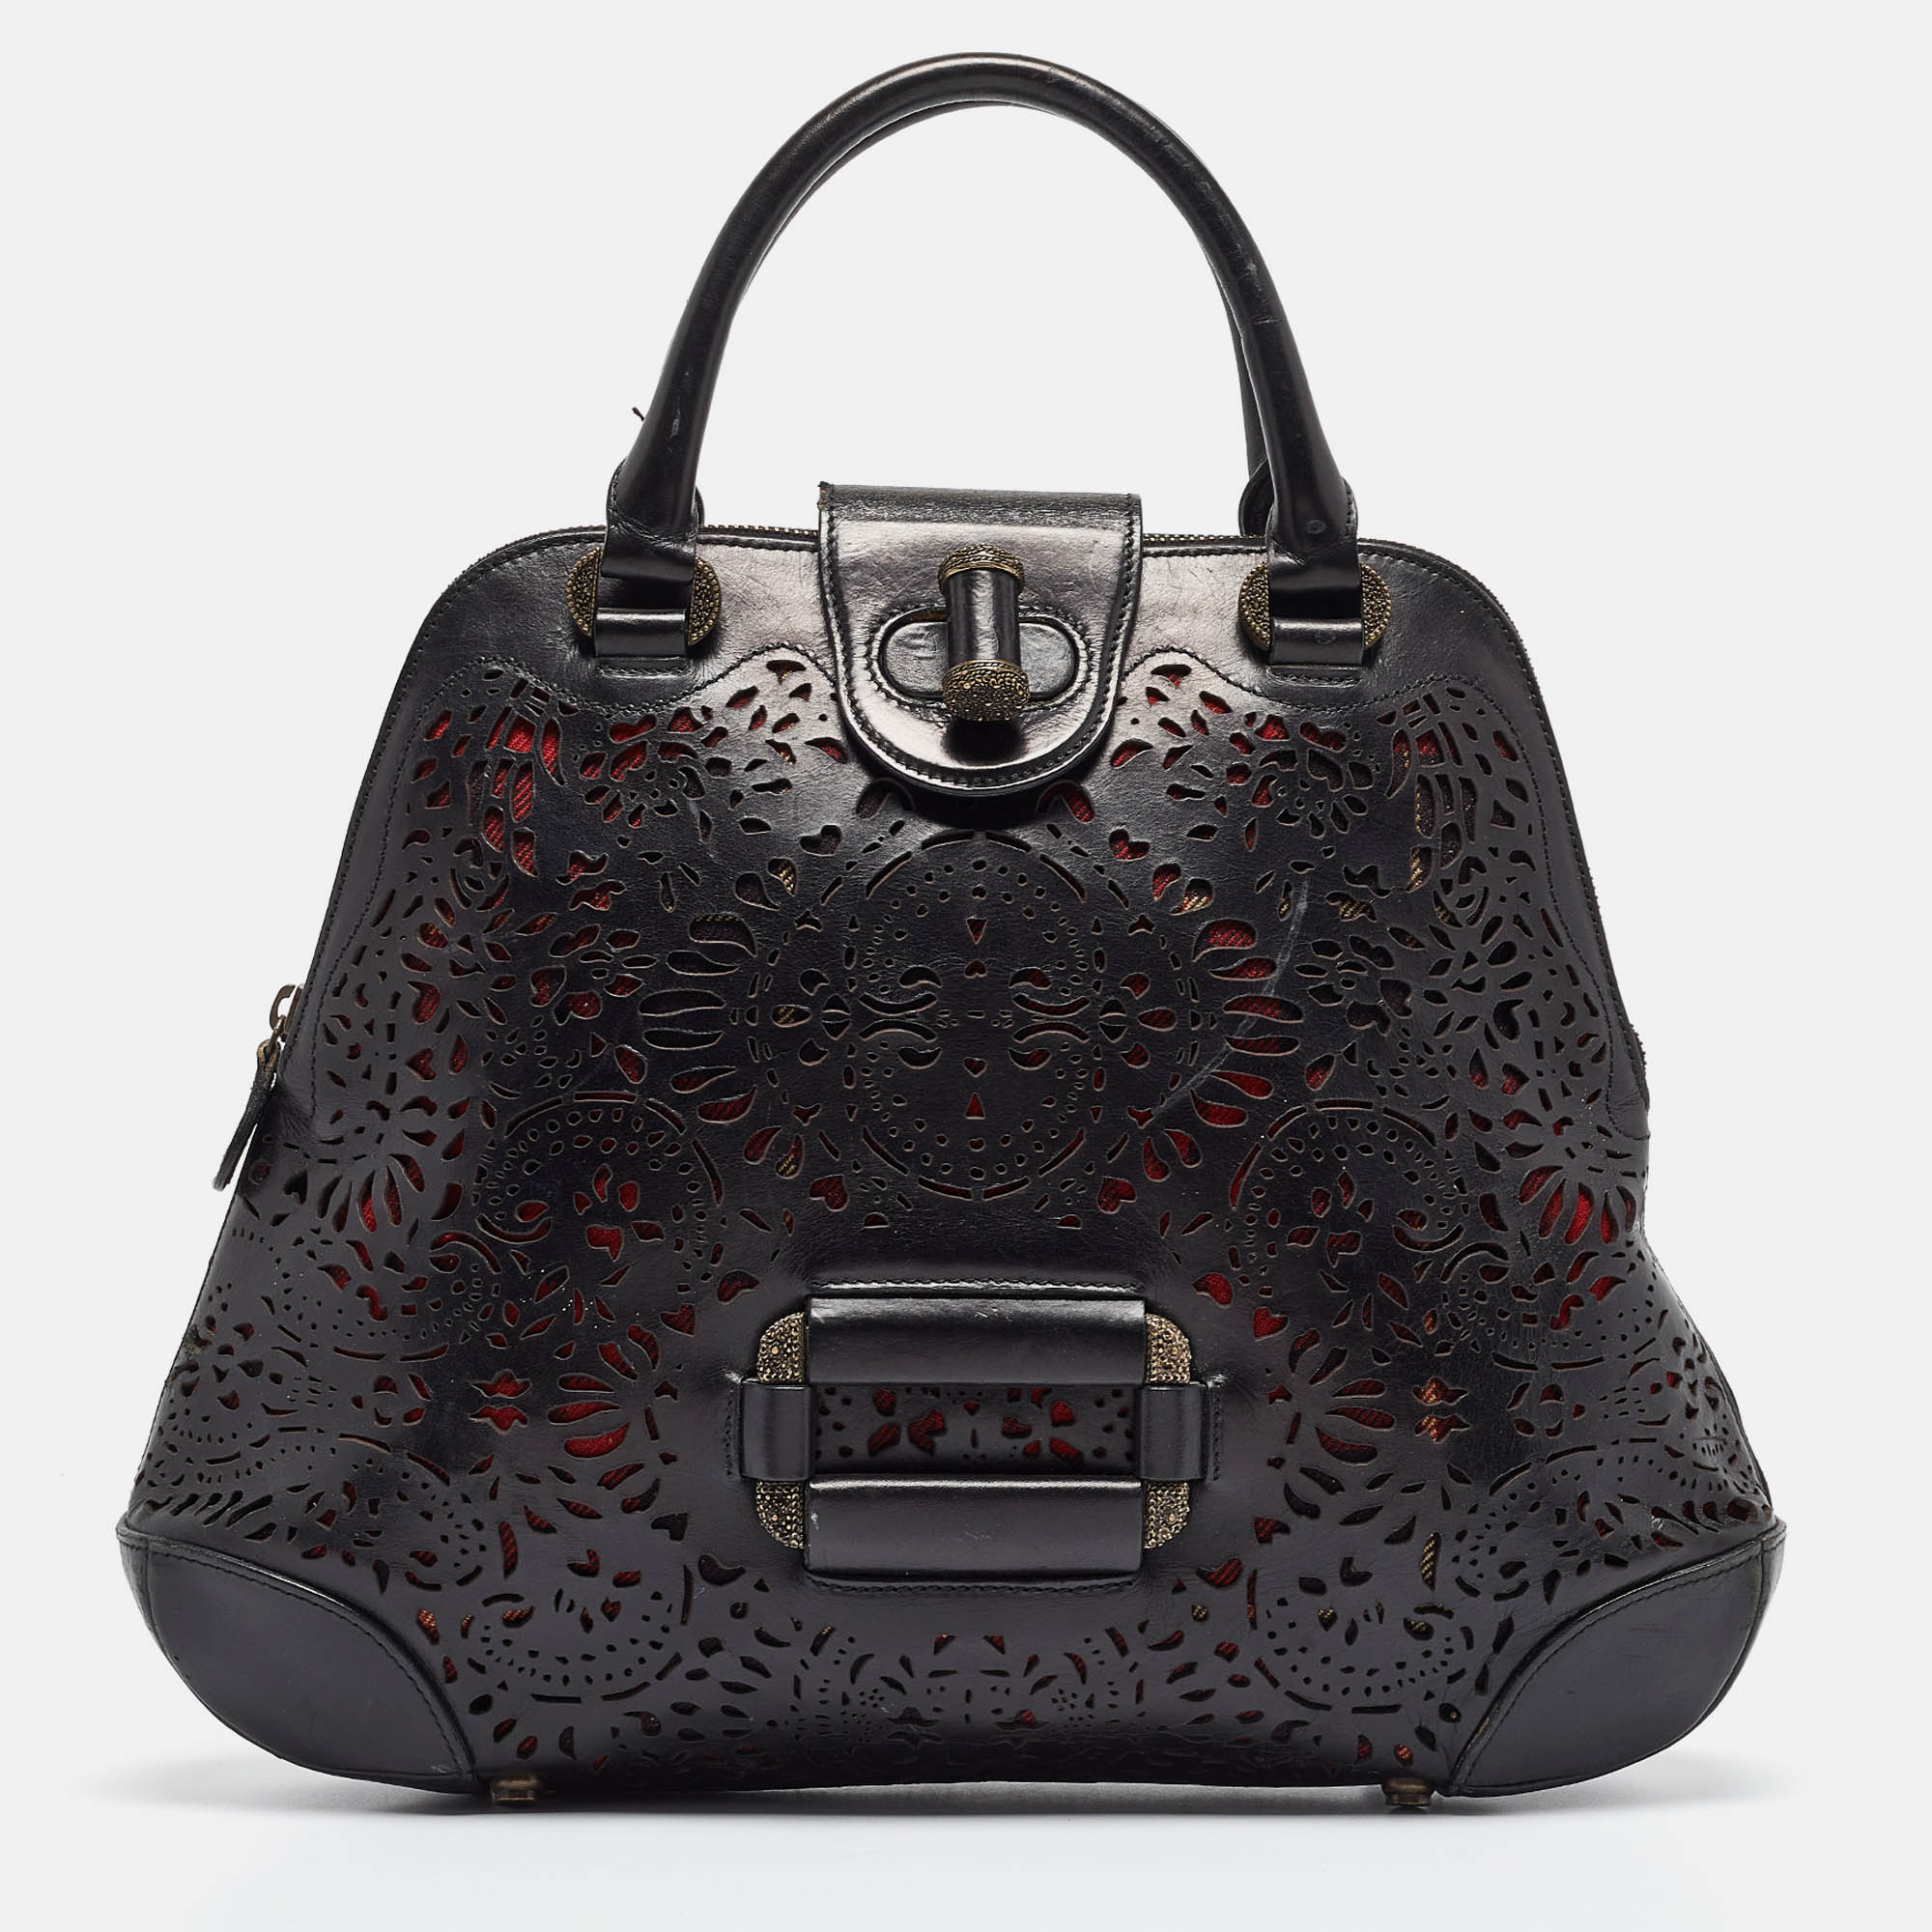 Alexander mcqueen black laser cut leather novak satchel